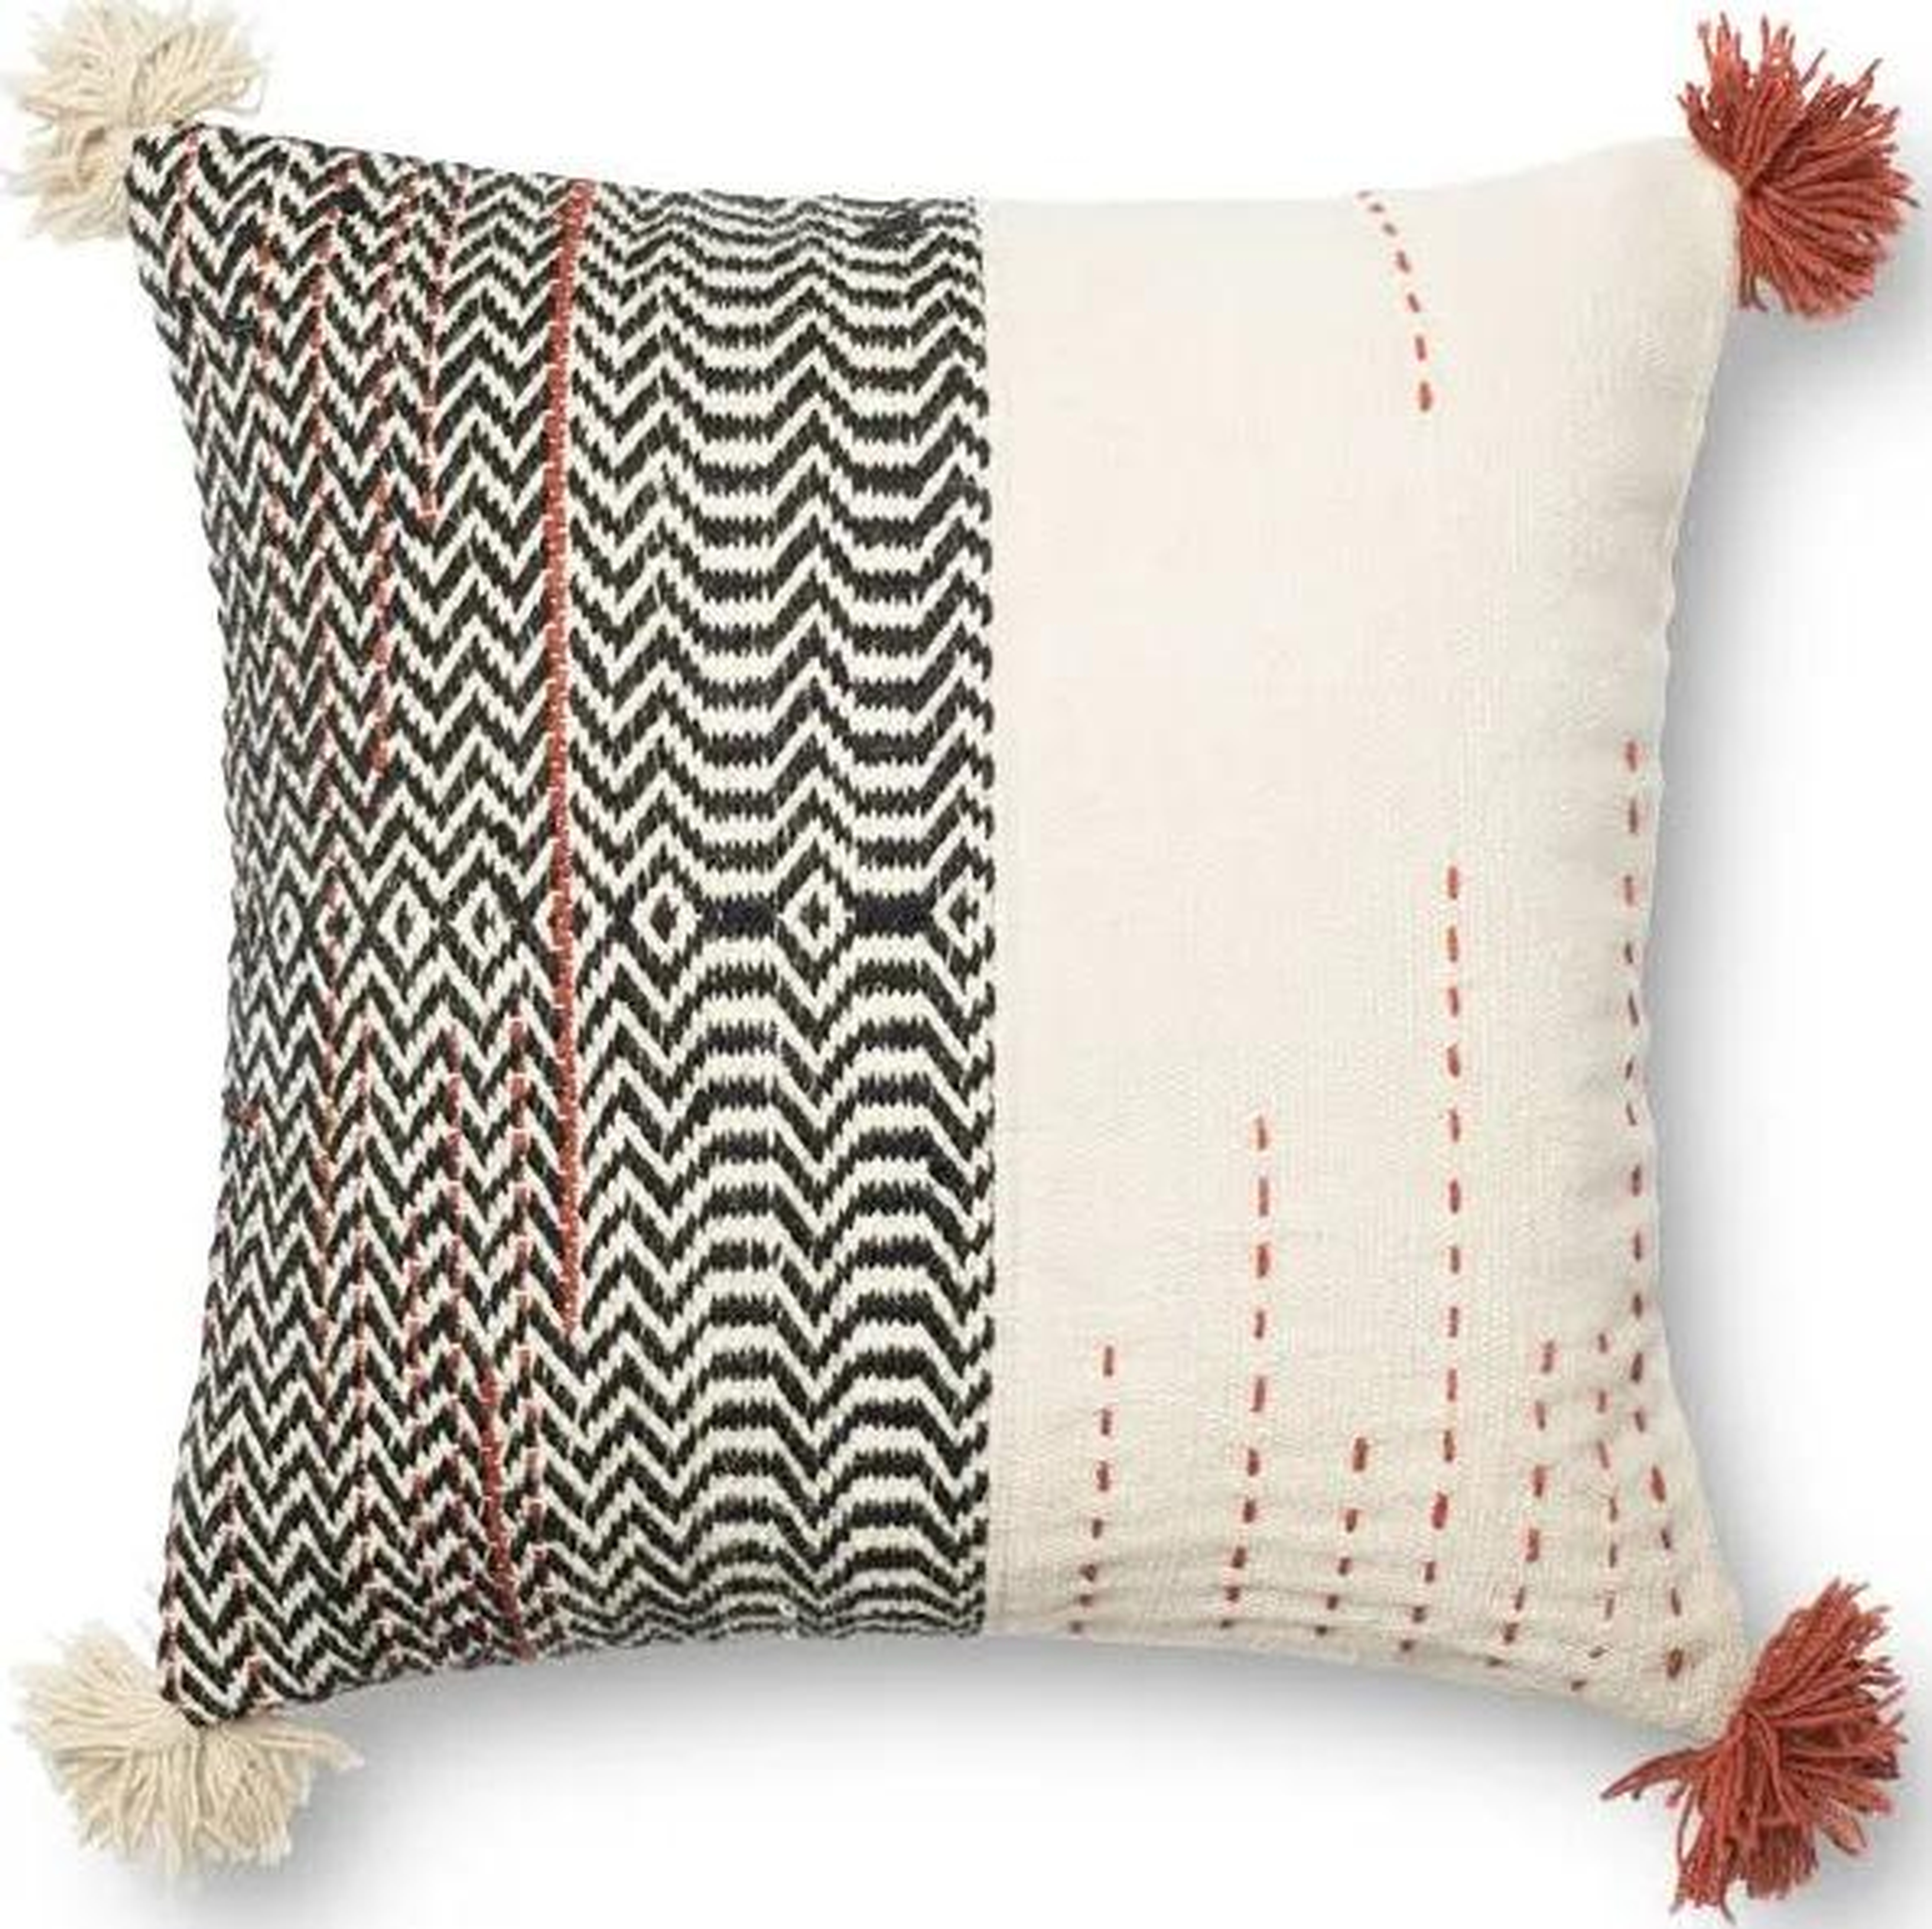 Split Pattern Throw Pillow with Tassels, 22" x 22", Black, Ivory & Orange - Loma Threads